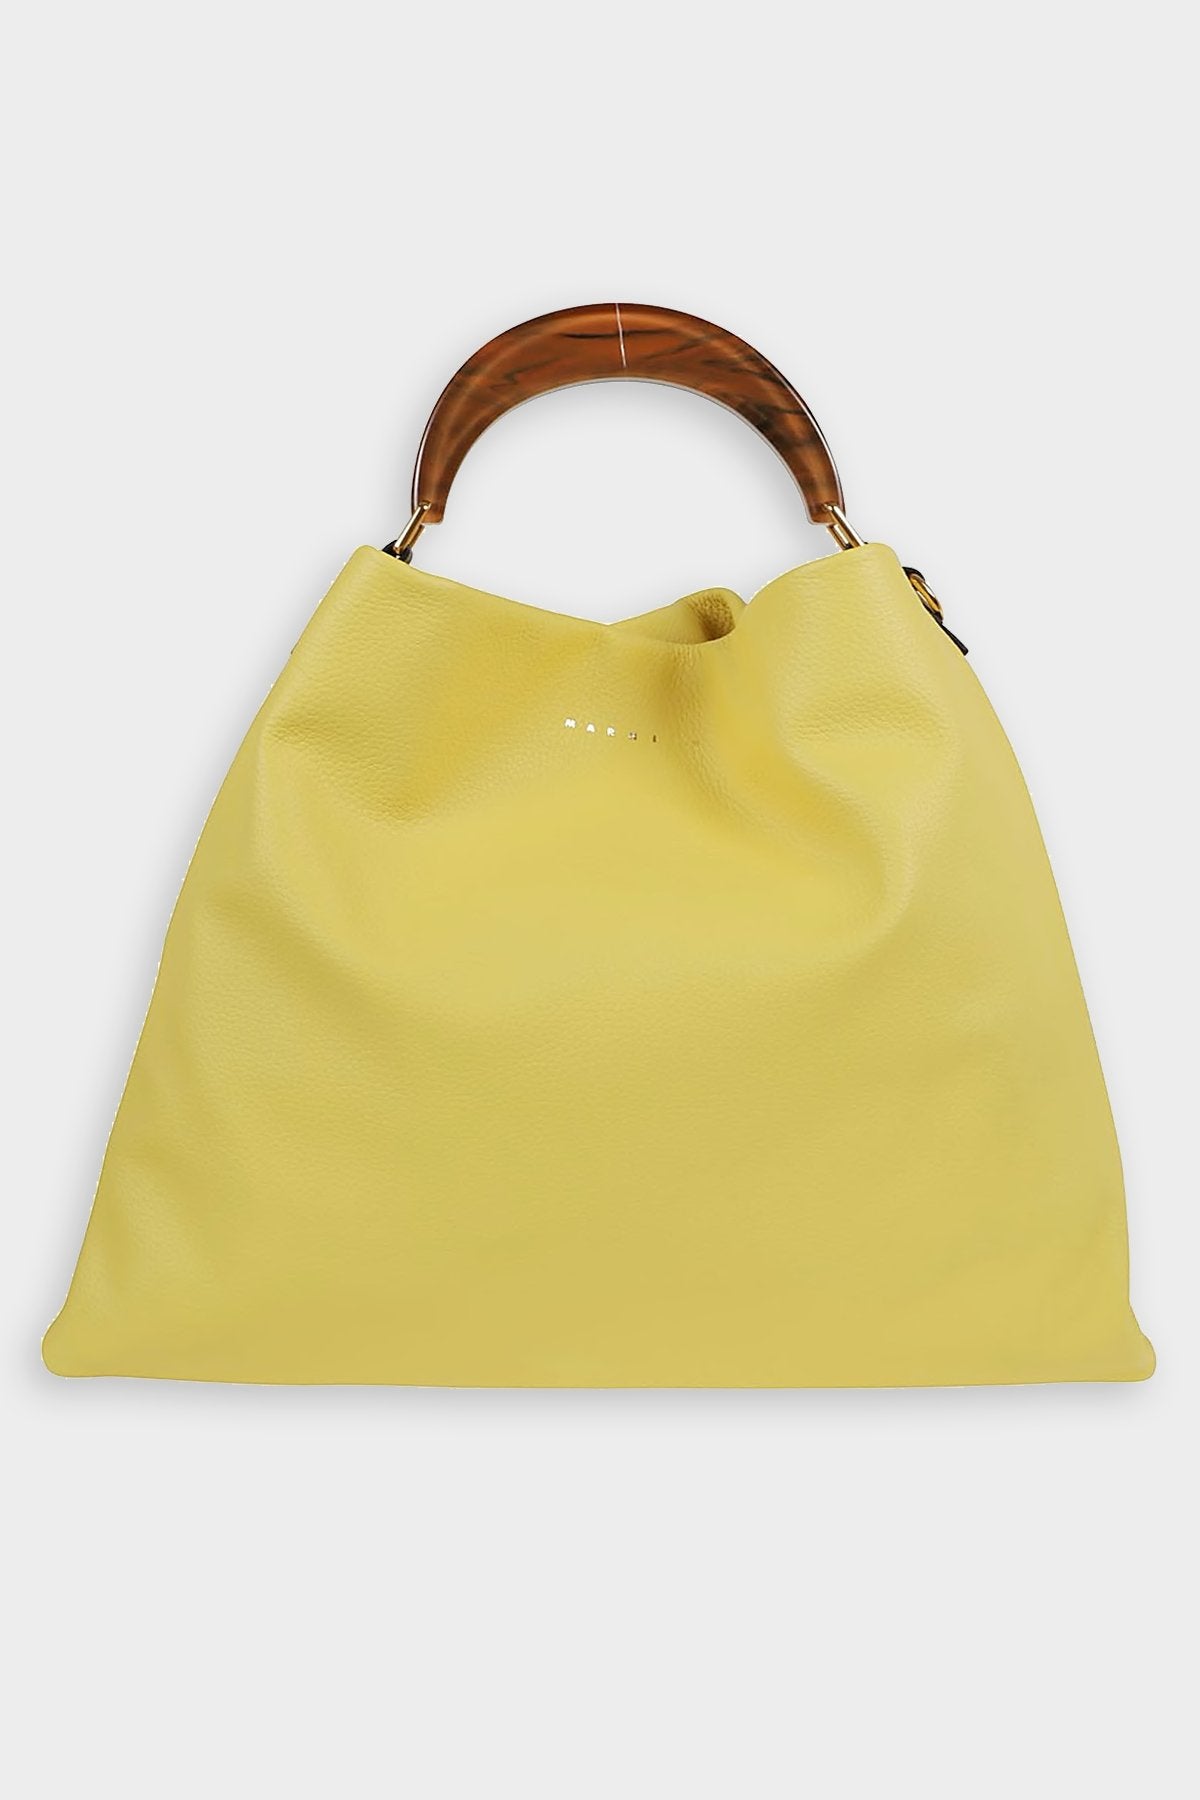 Hobo Calfskin Medium Shoulder Bag in Yellow - shop-olivia.com